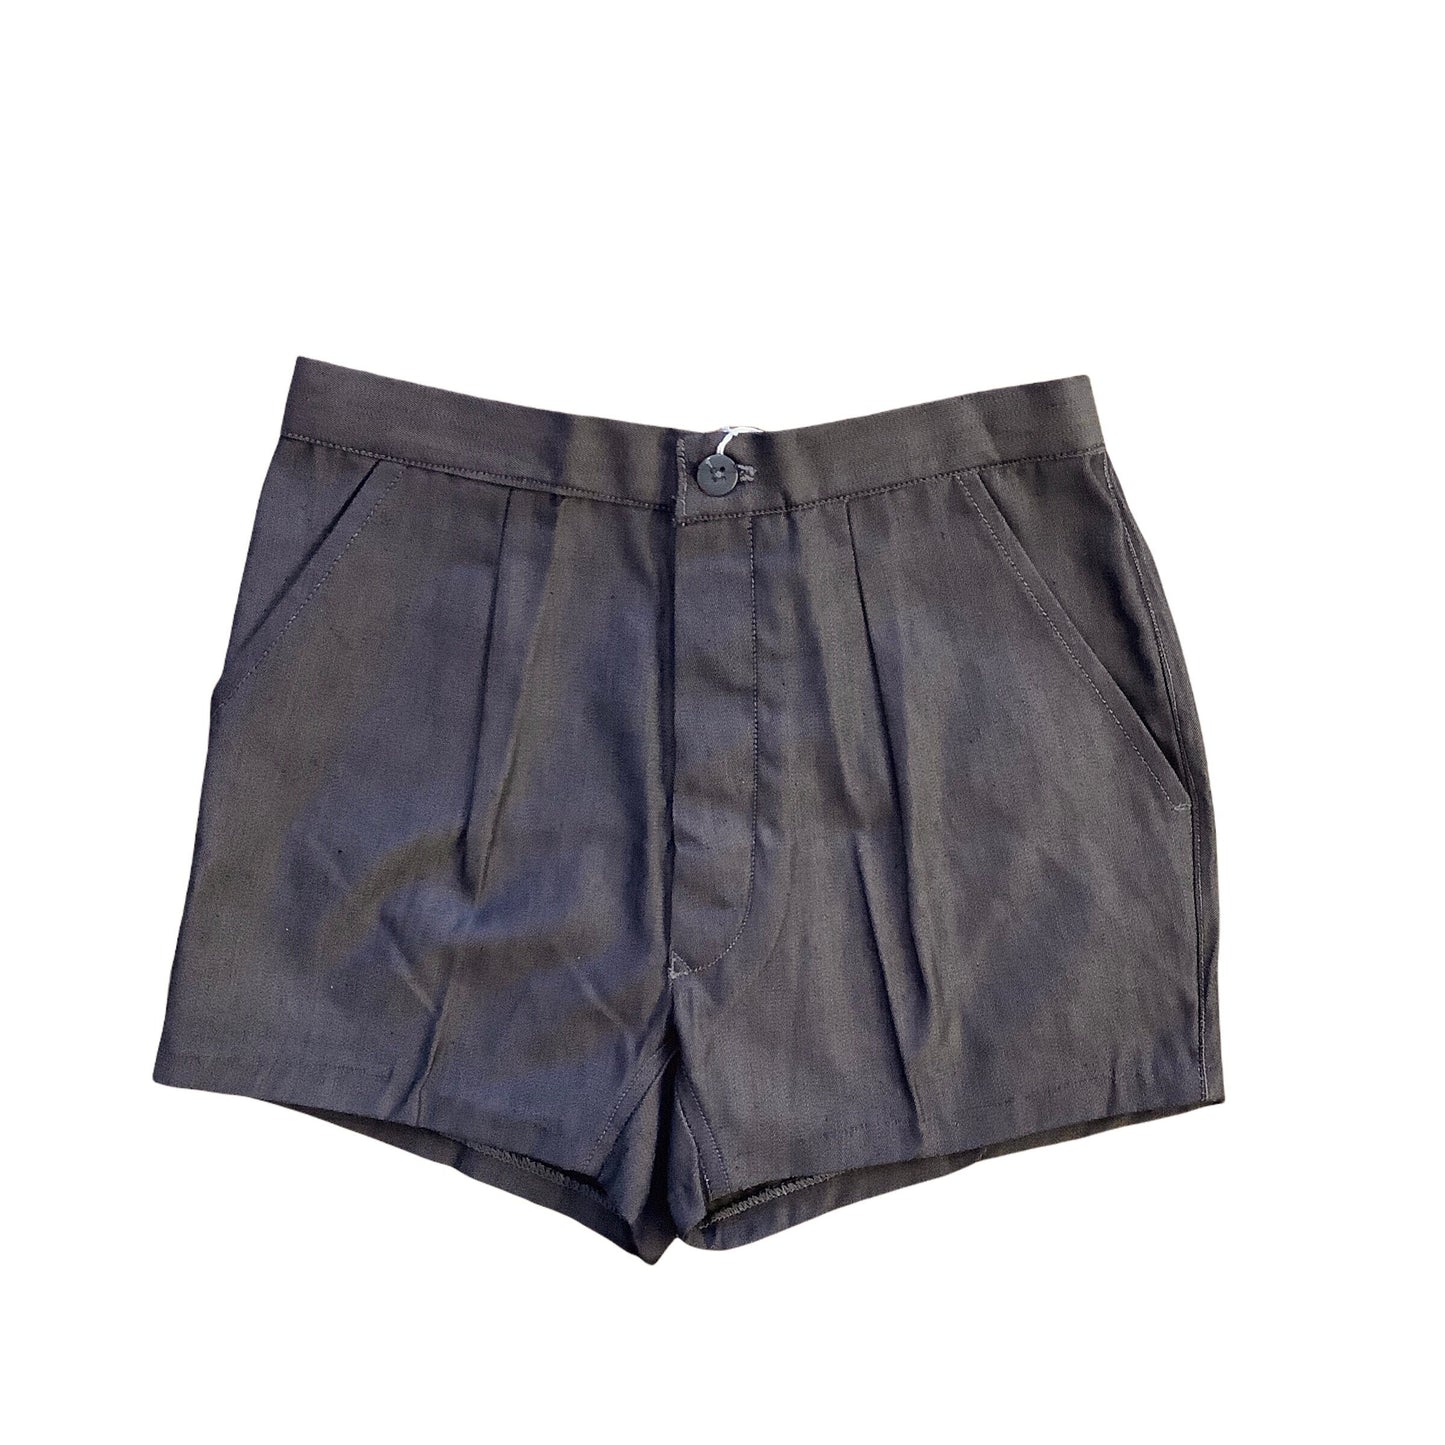 French Vintage 1960s Dark Brown Shorts 6-8Y